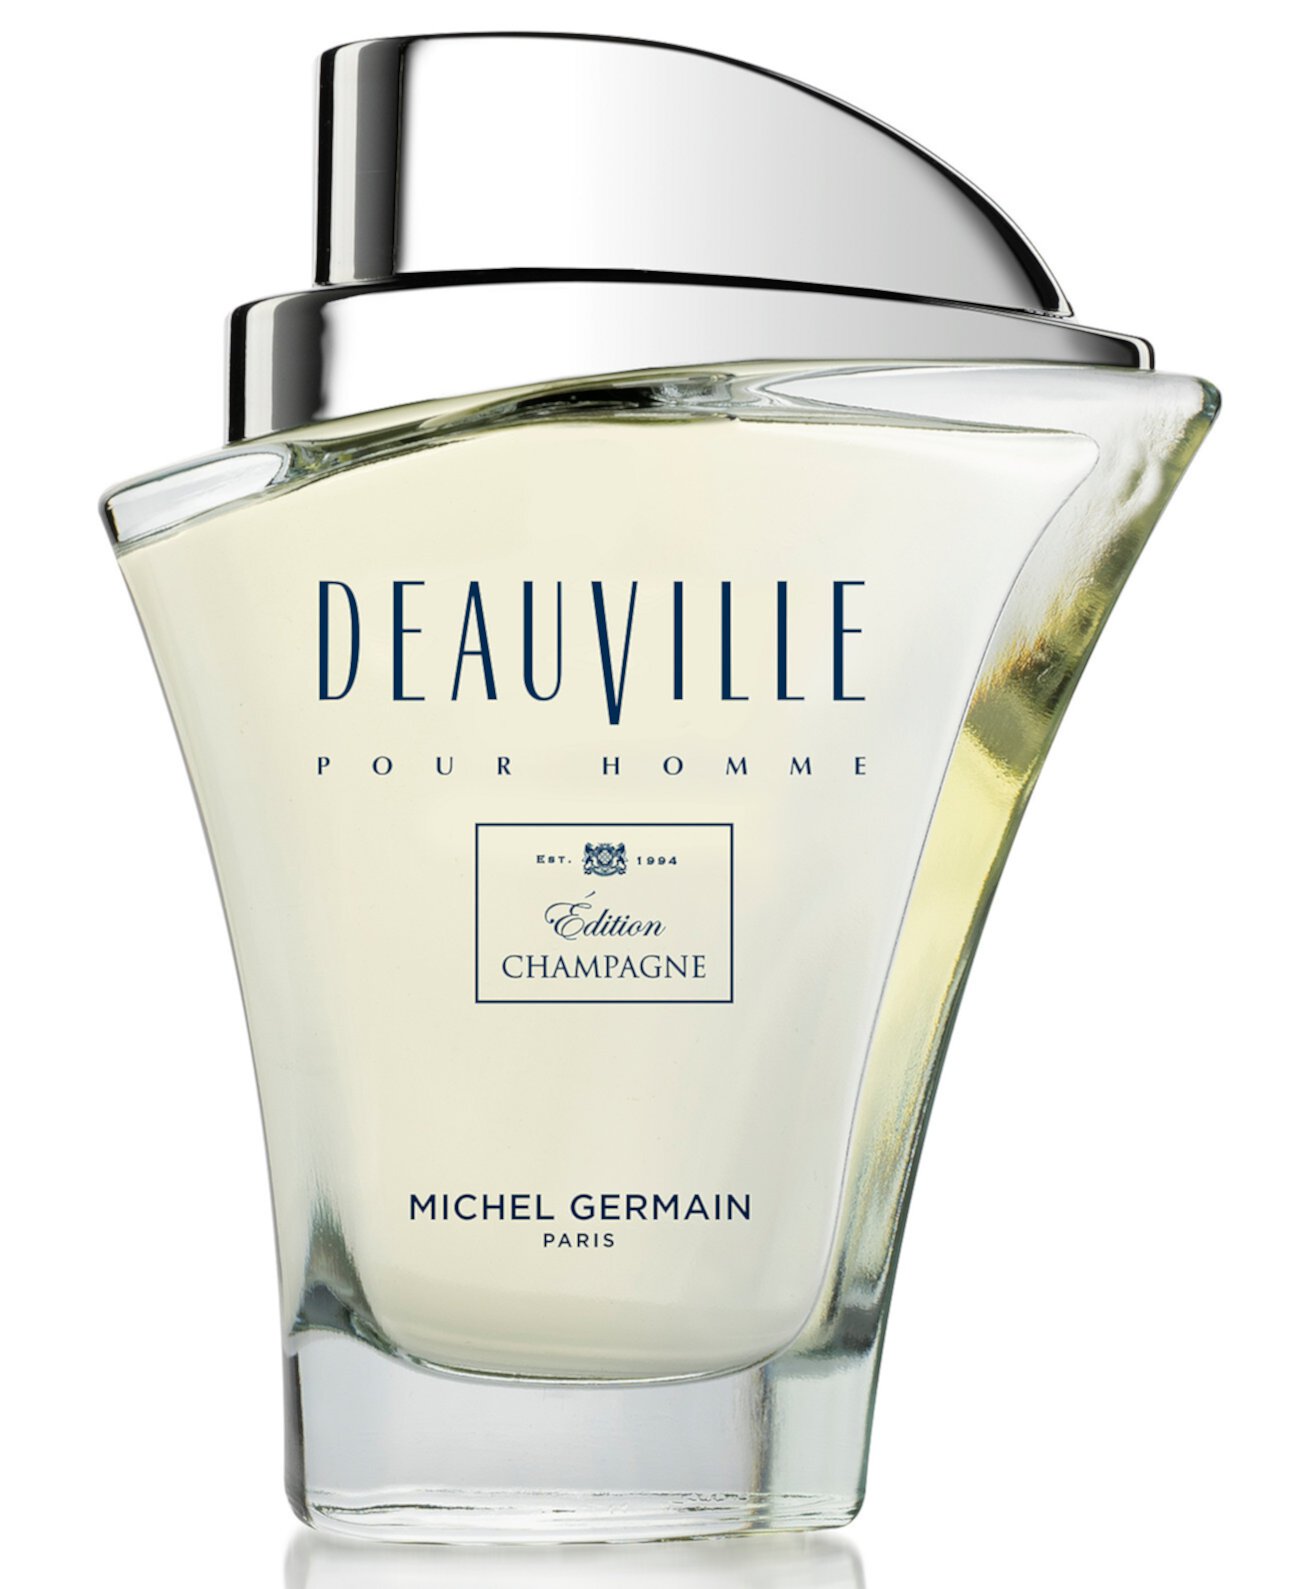 Мужская Deauville Pour Homme om dition Champagne Туалетная вода, 2,5 унции. Michel Germain